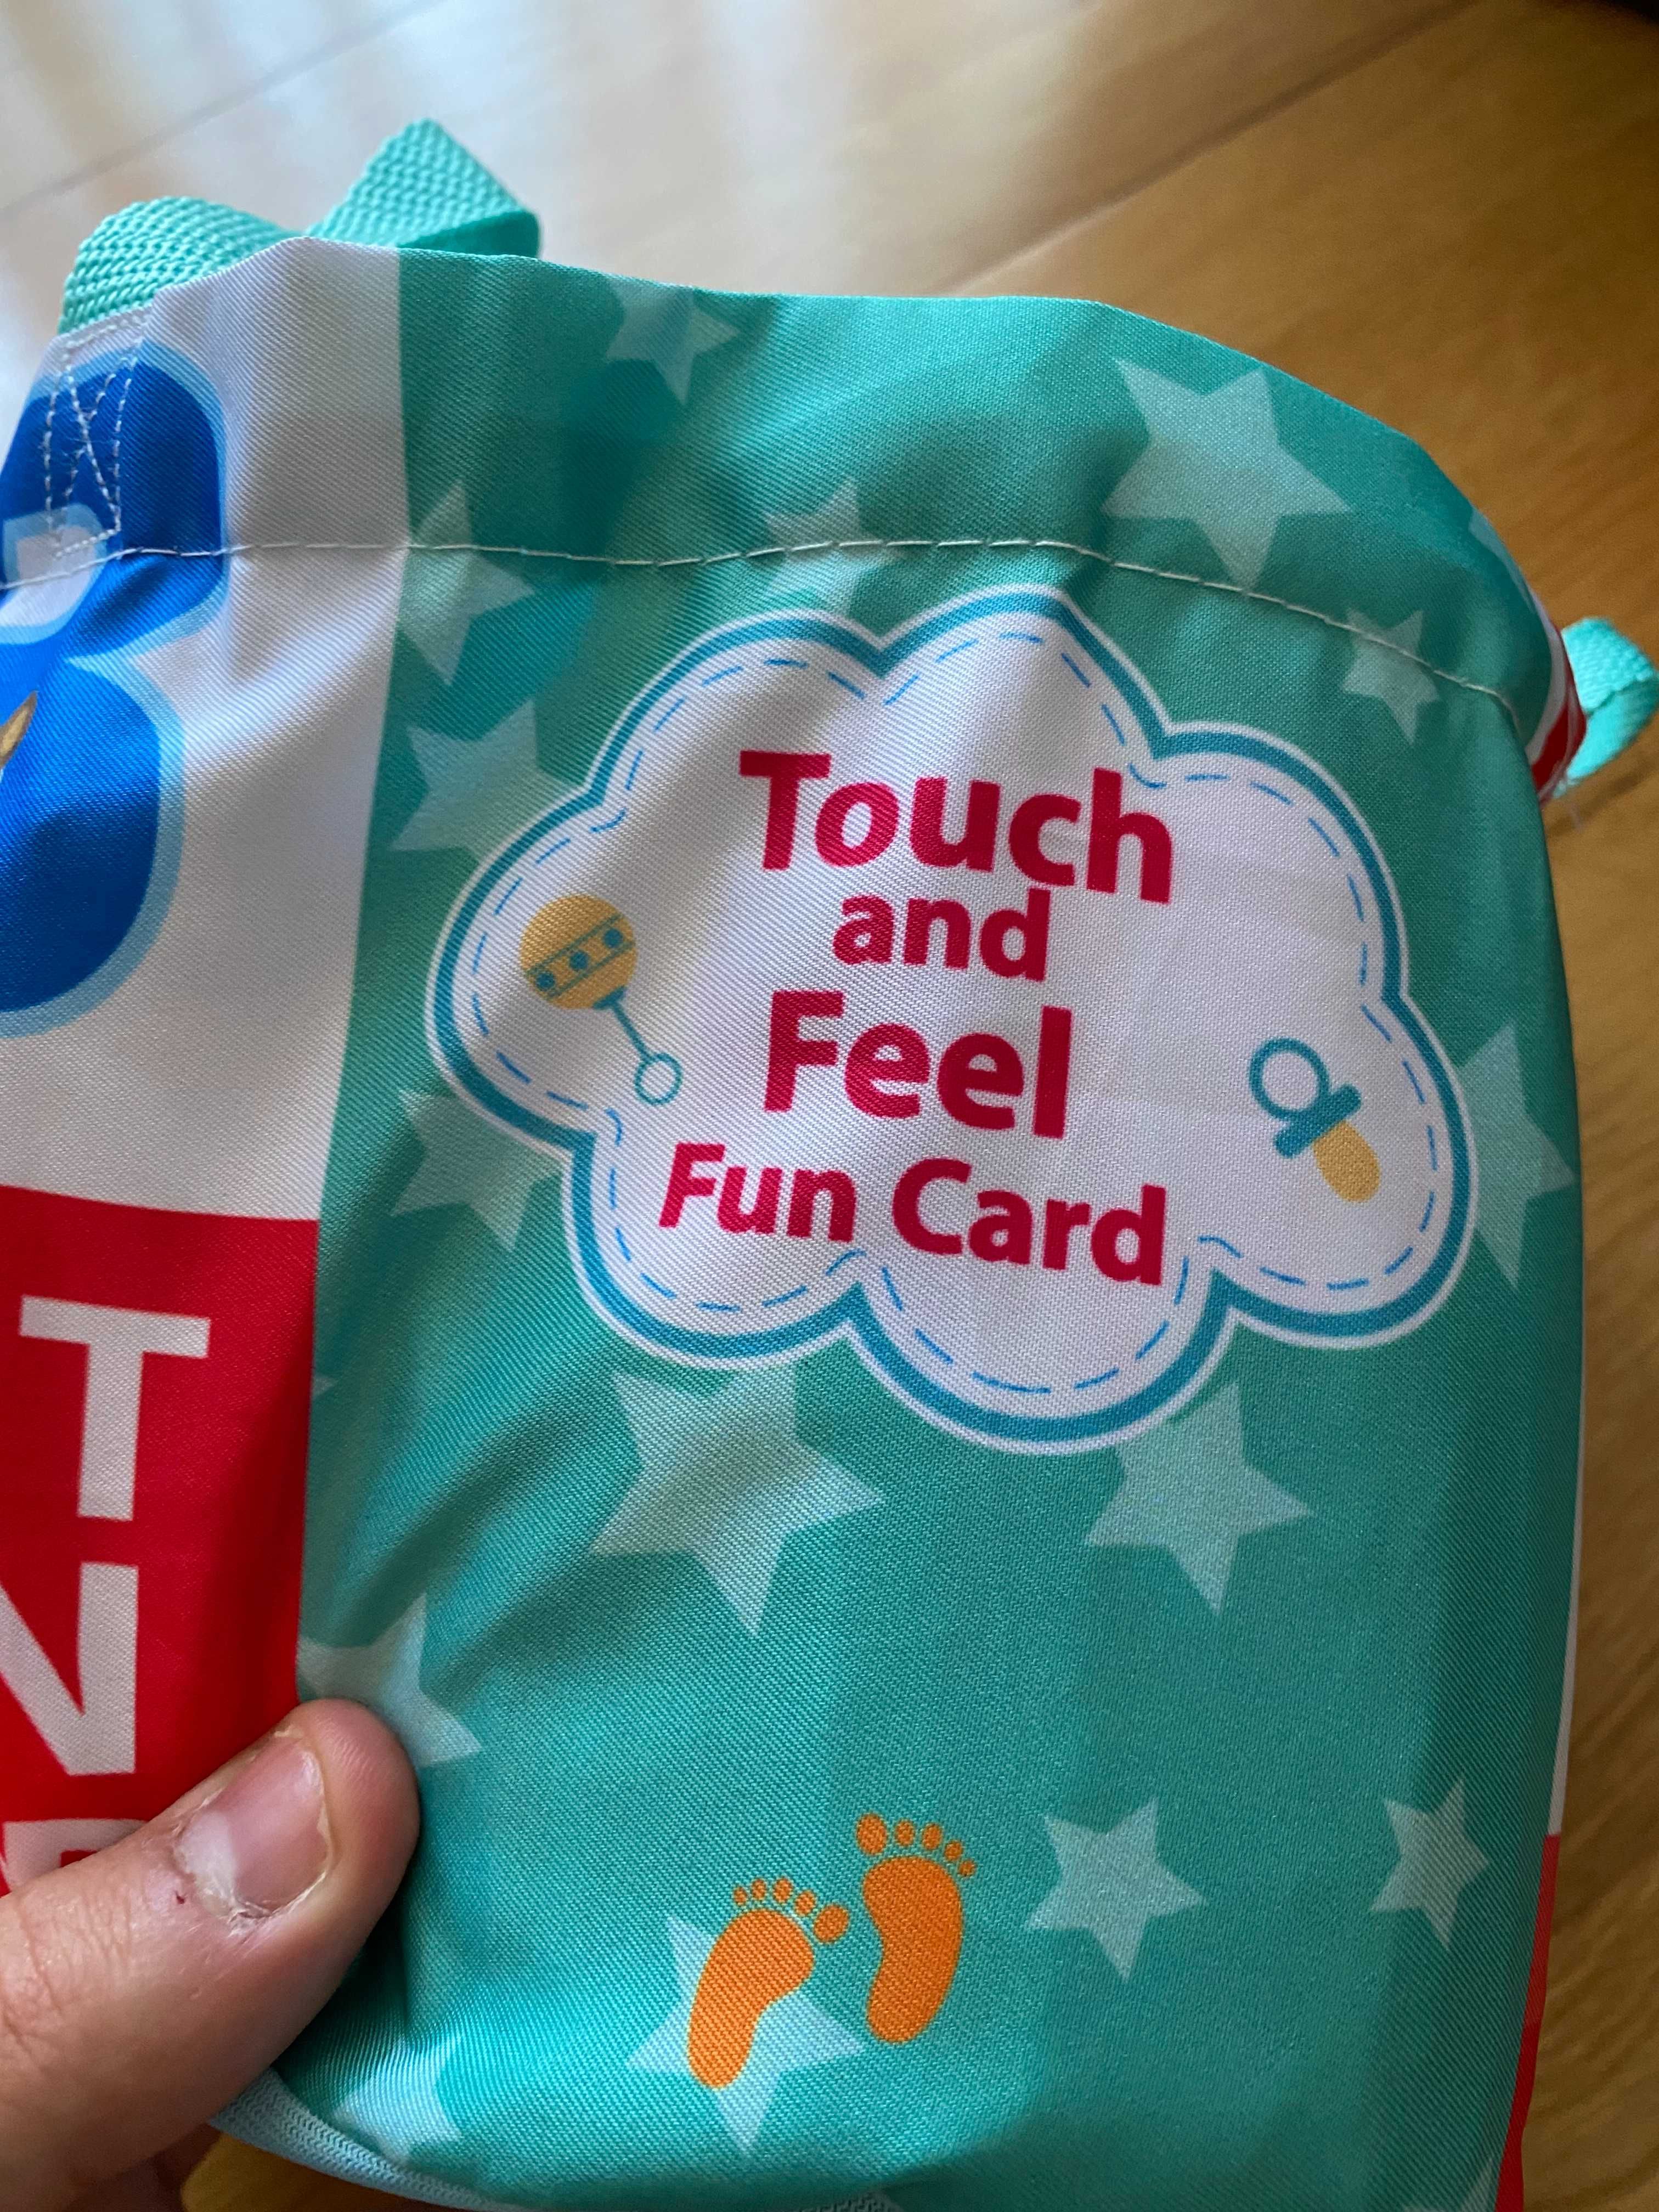 Touch and Feel Fun Card - Como novo, pouco utilizado (Em Inglês)